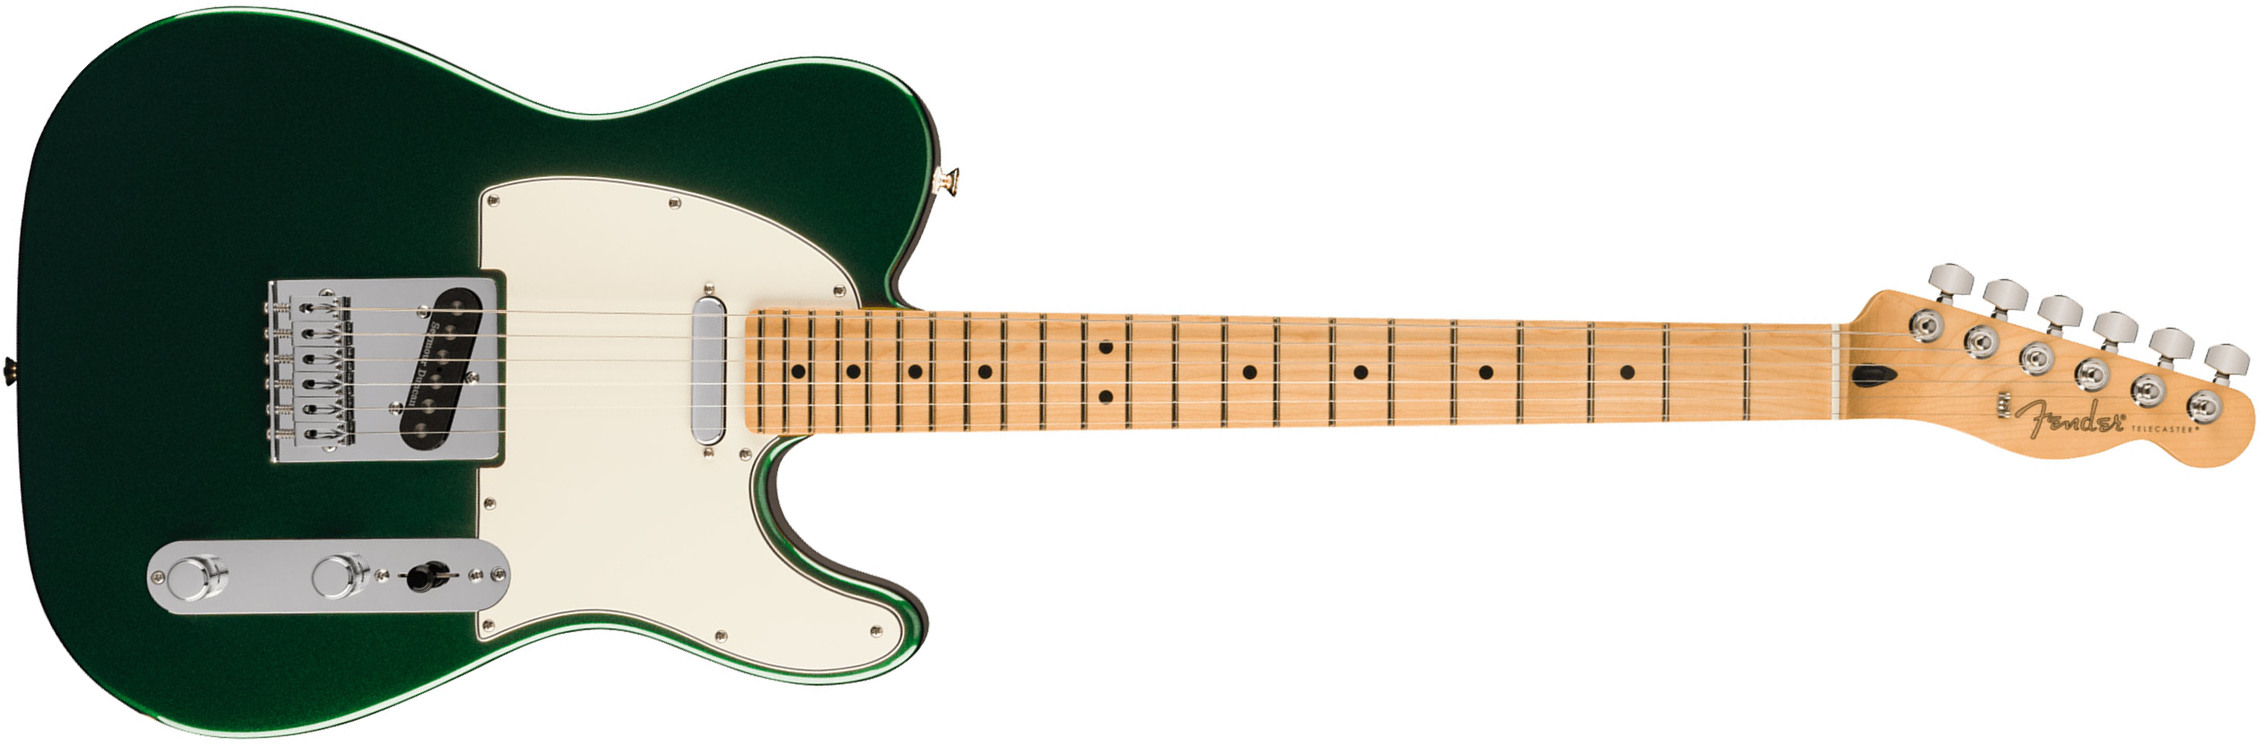 Fender Tele Player Ltd Mex 2s Seymour Duncan Mn - British Racing Green - E-Gitarre in Teleform - Main picture